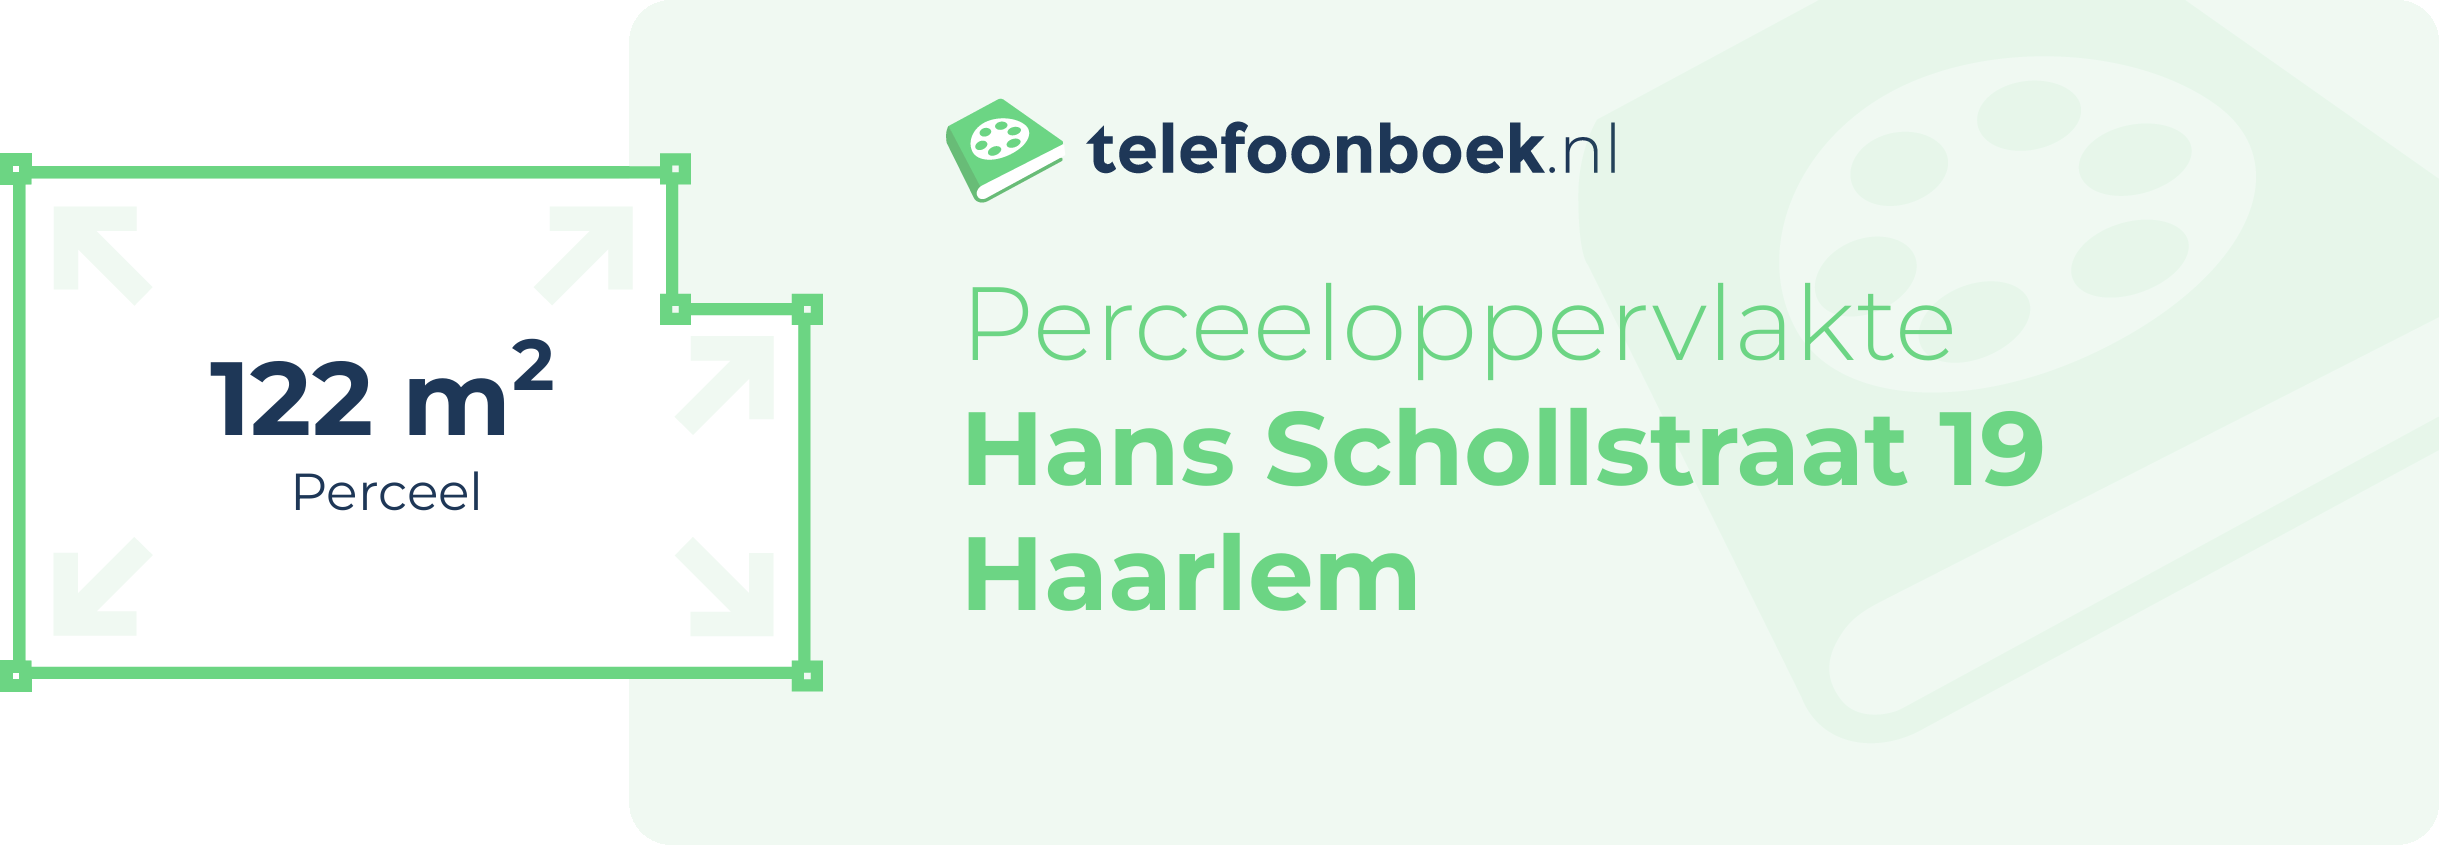 Perceeloppervlakte Hans Schollstraat 19 Haarlem